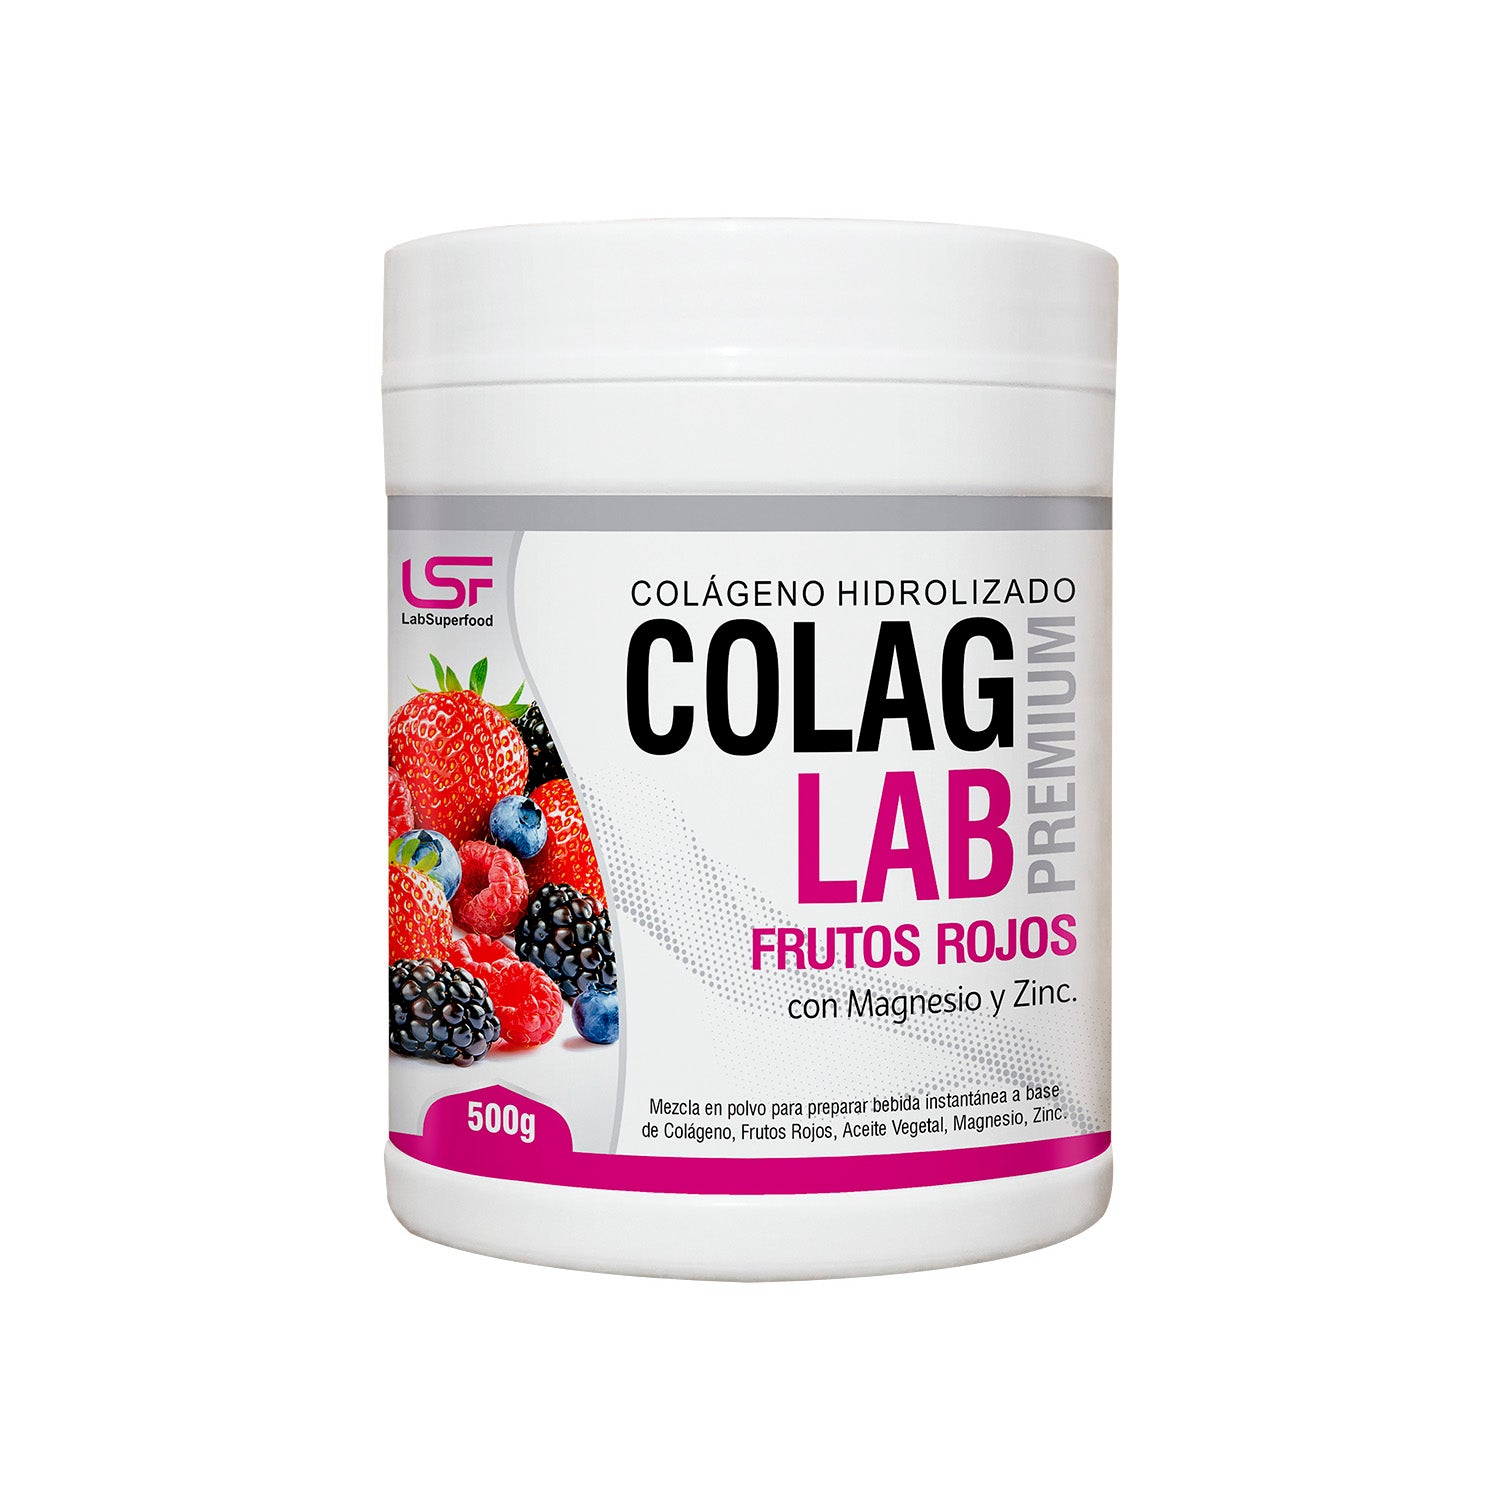 Colag Lab Frutos Rojos - 500g